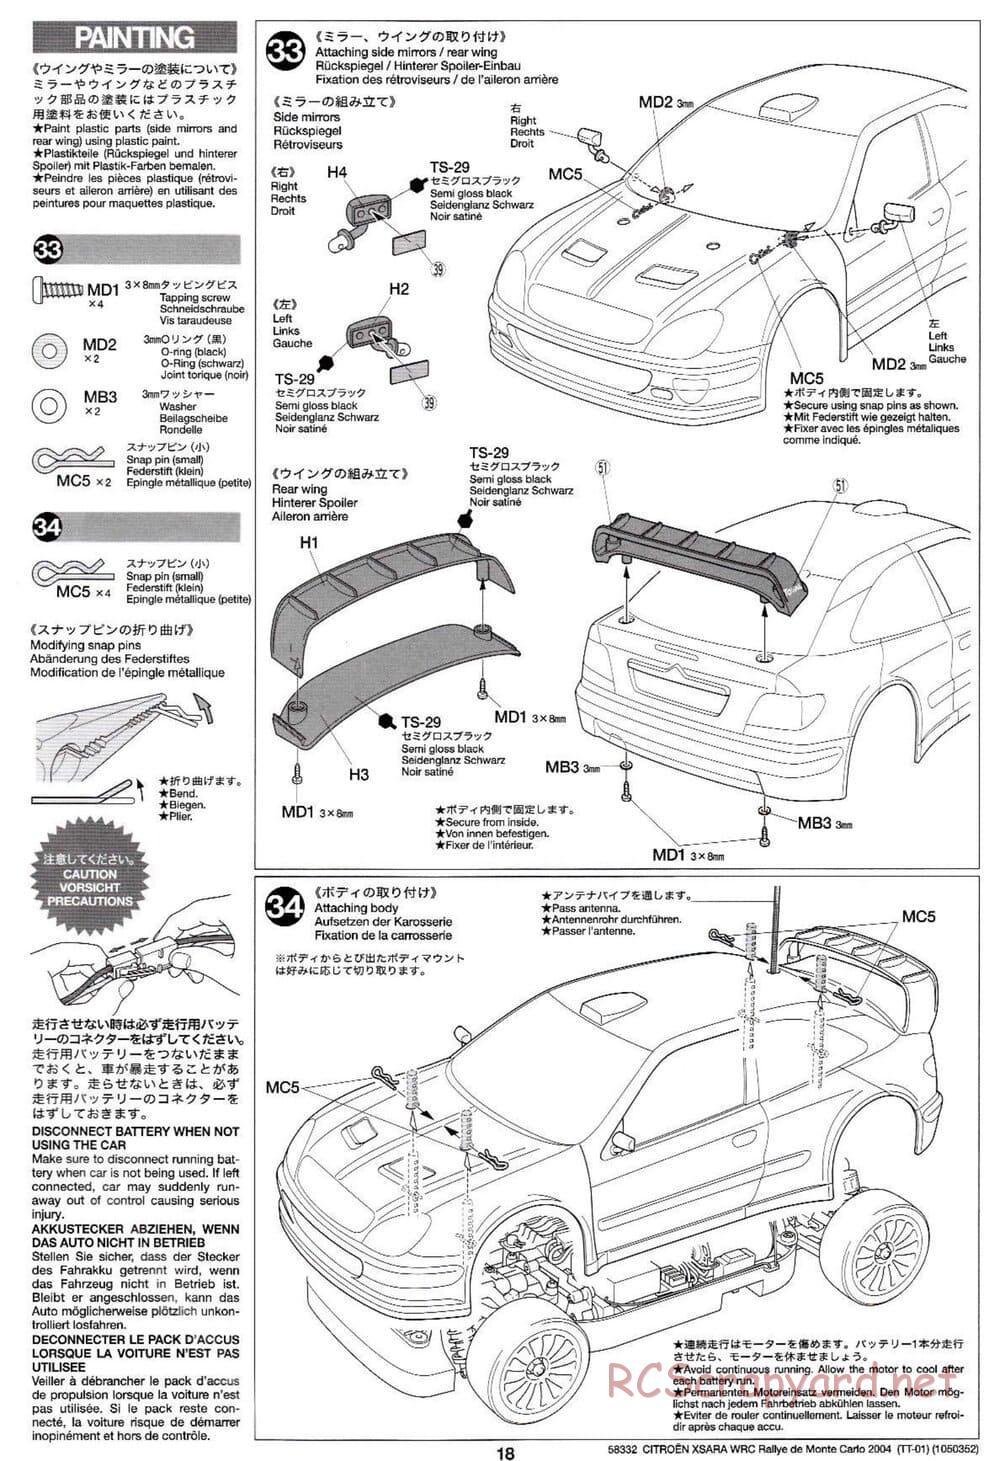 Tamiya - Citroen Xsara WRC Rallye De Monte Carlo 2004 - TT-01 Chassis - Manual - Page 18